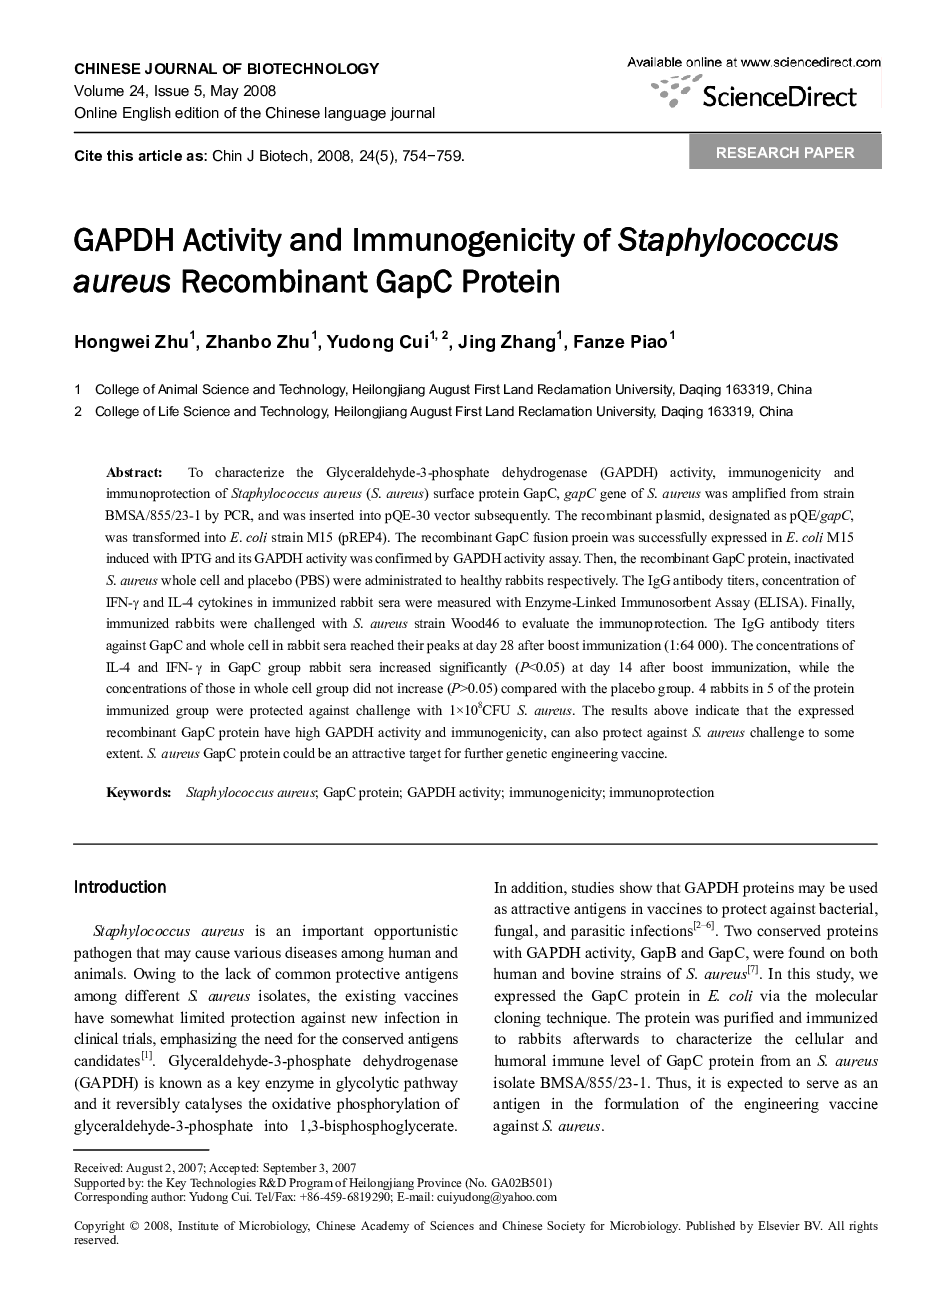 GAPDH Activity and Immunogenicity of Staphylococcus aureus Recombinant GapC Protein